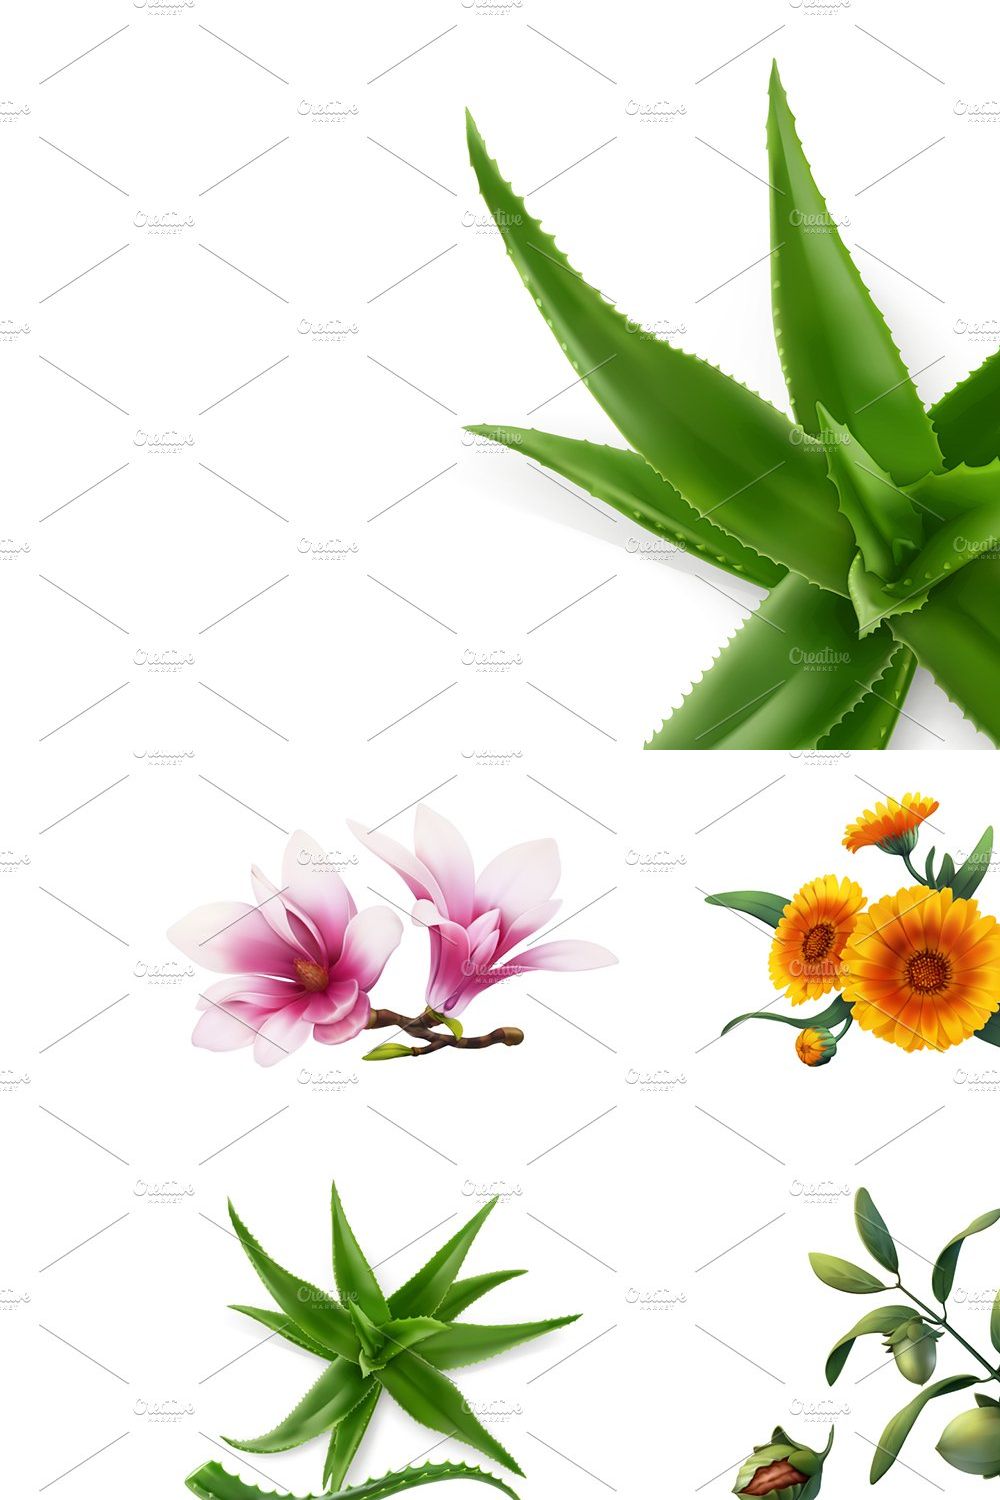 Aloe, rose, tea, skin care, vectors pinterest preview image.